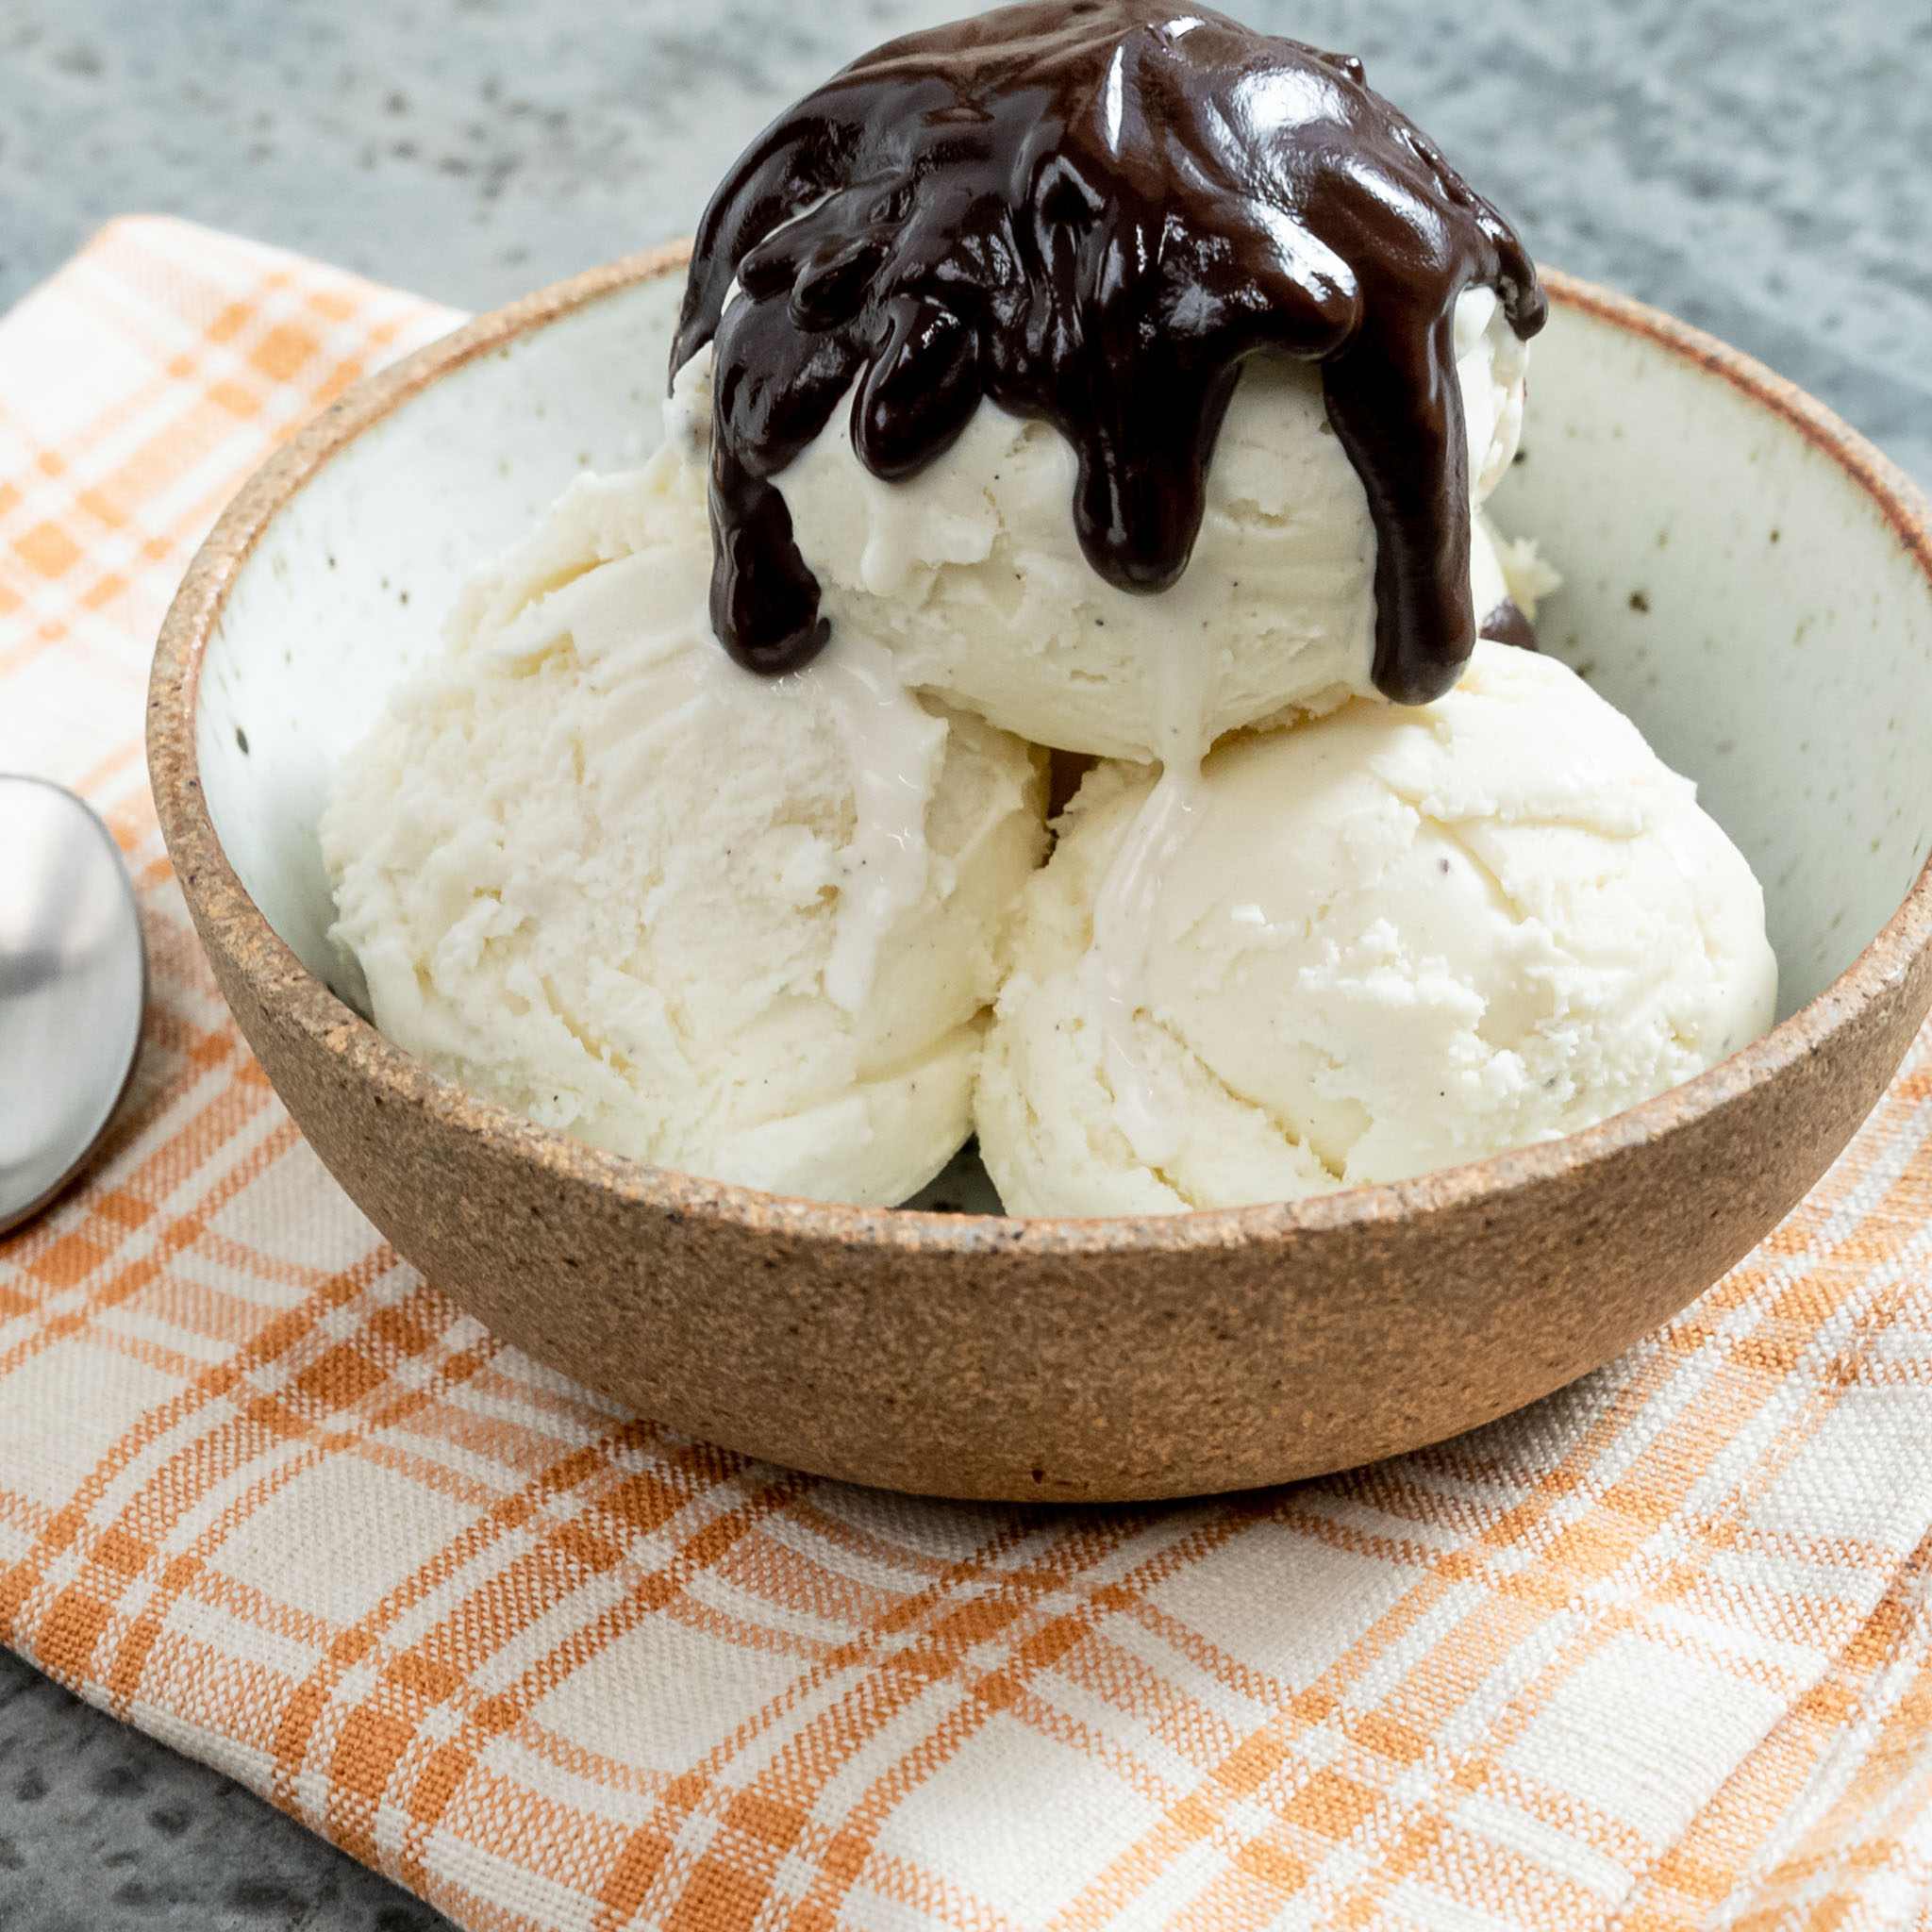 Joanna Gaines' Homemade Ice Cream and Chocolate Sauce